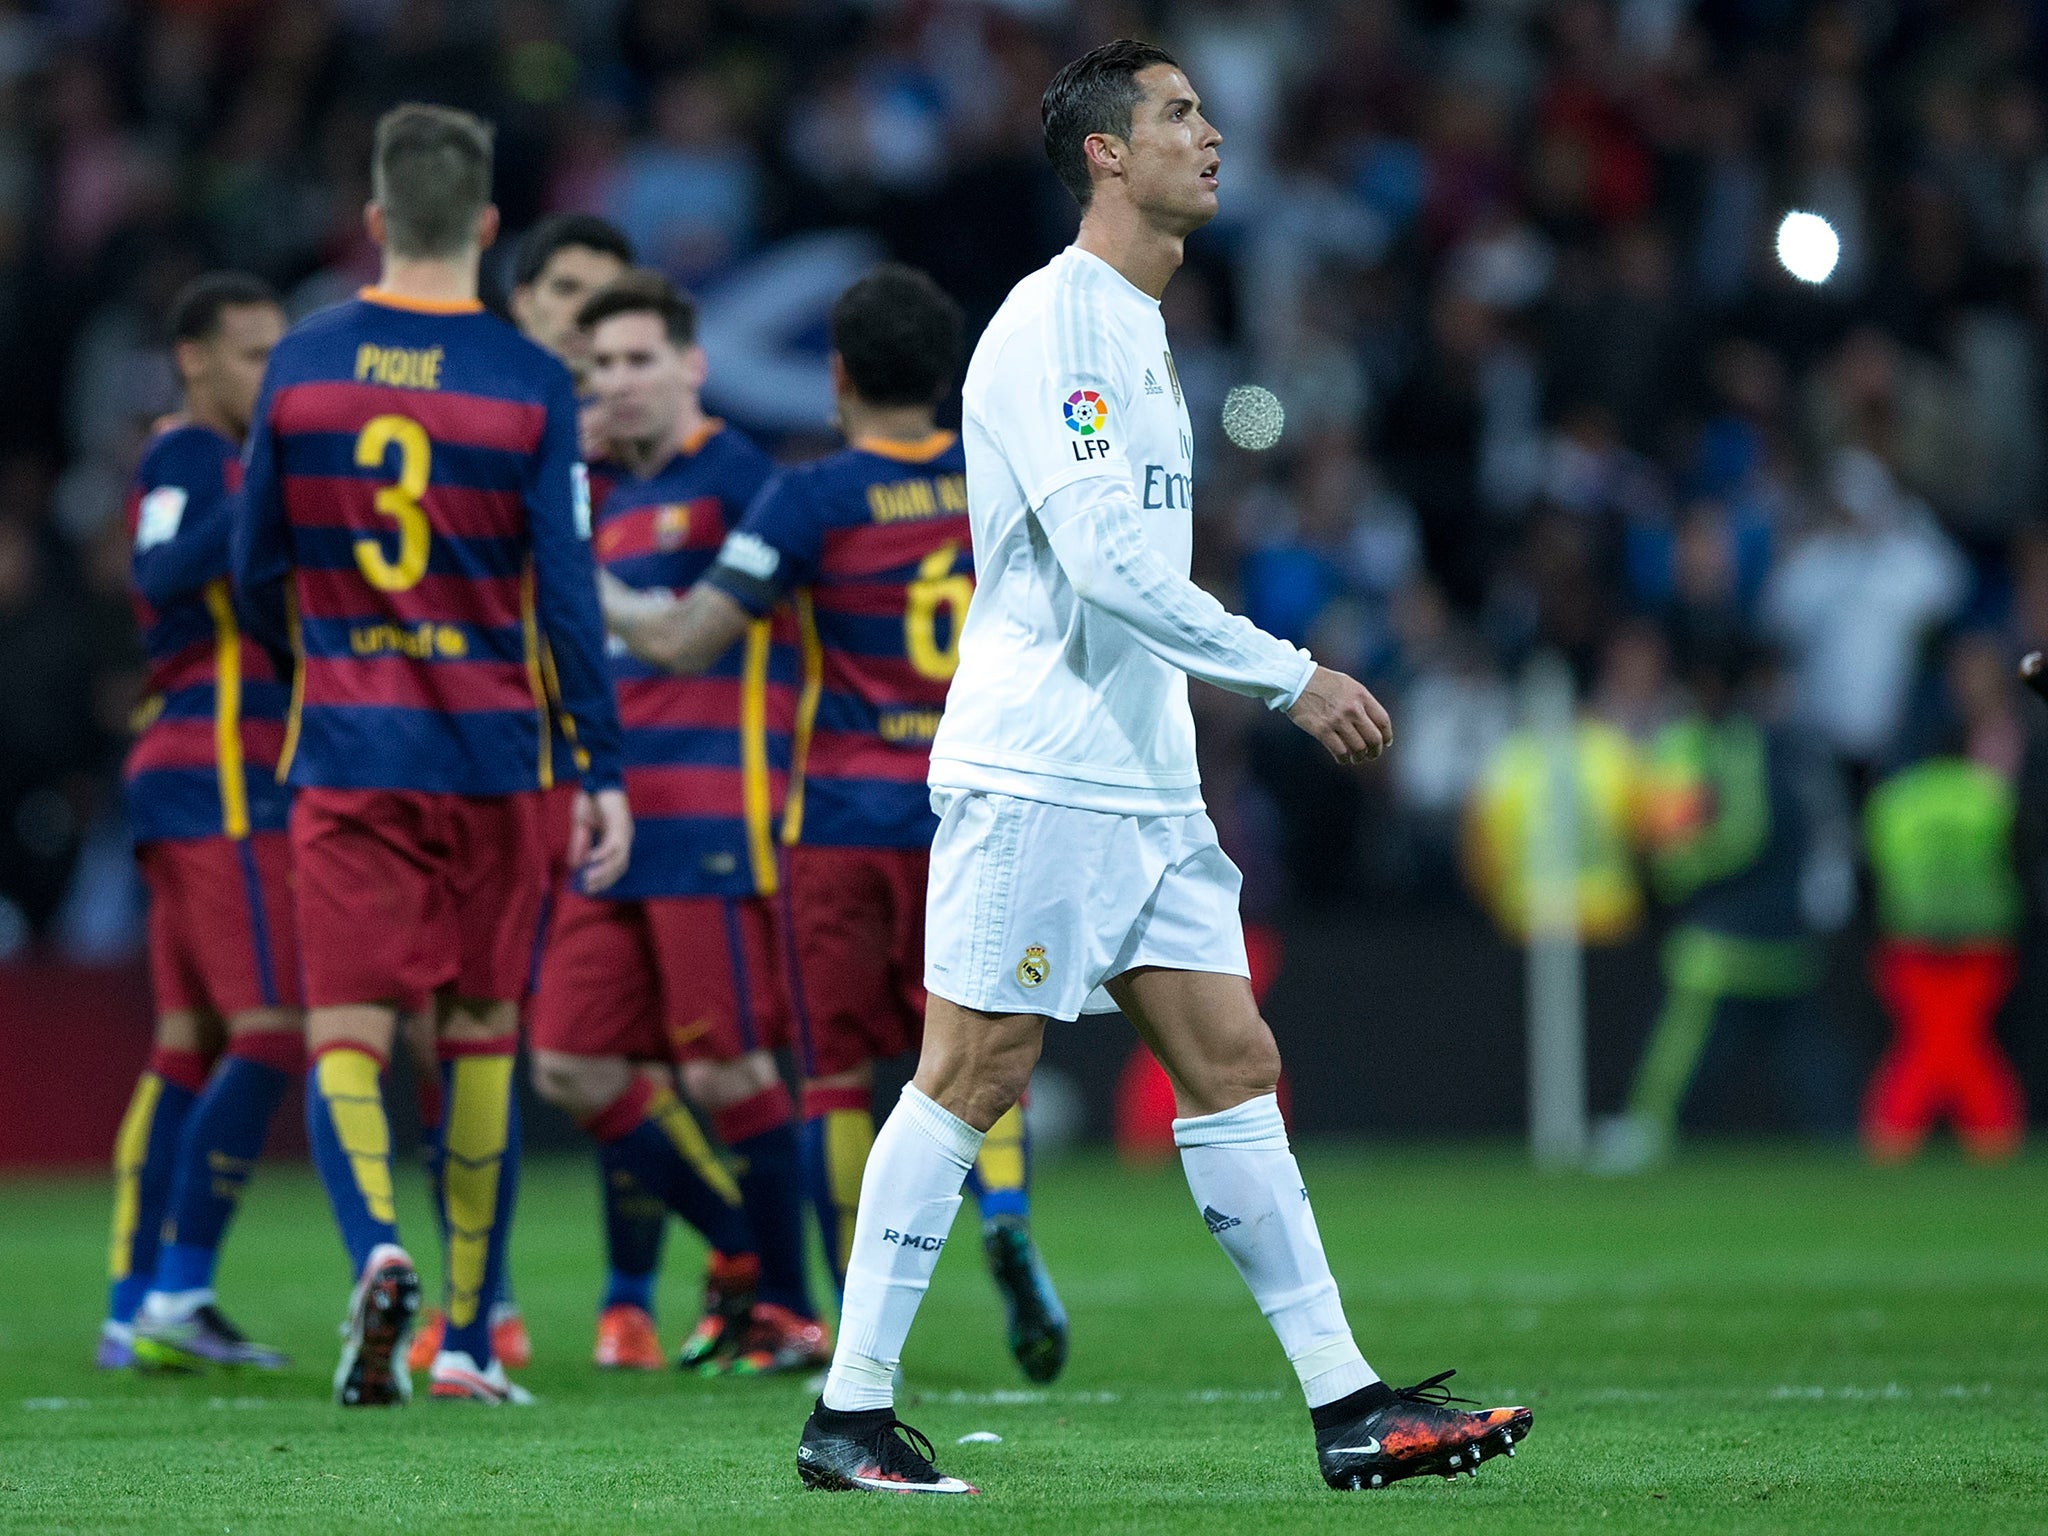 Real's defeat has increased speculation regarding Cristiano Ronaldo's future